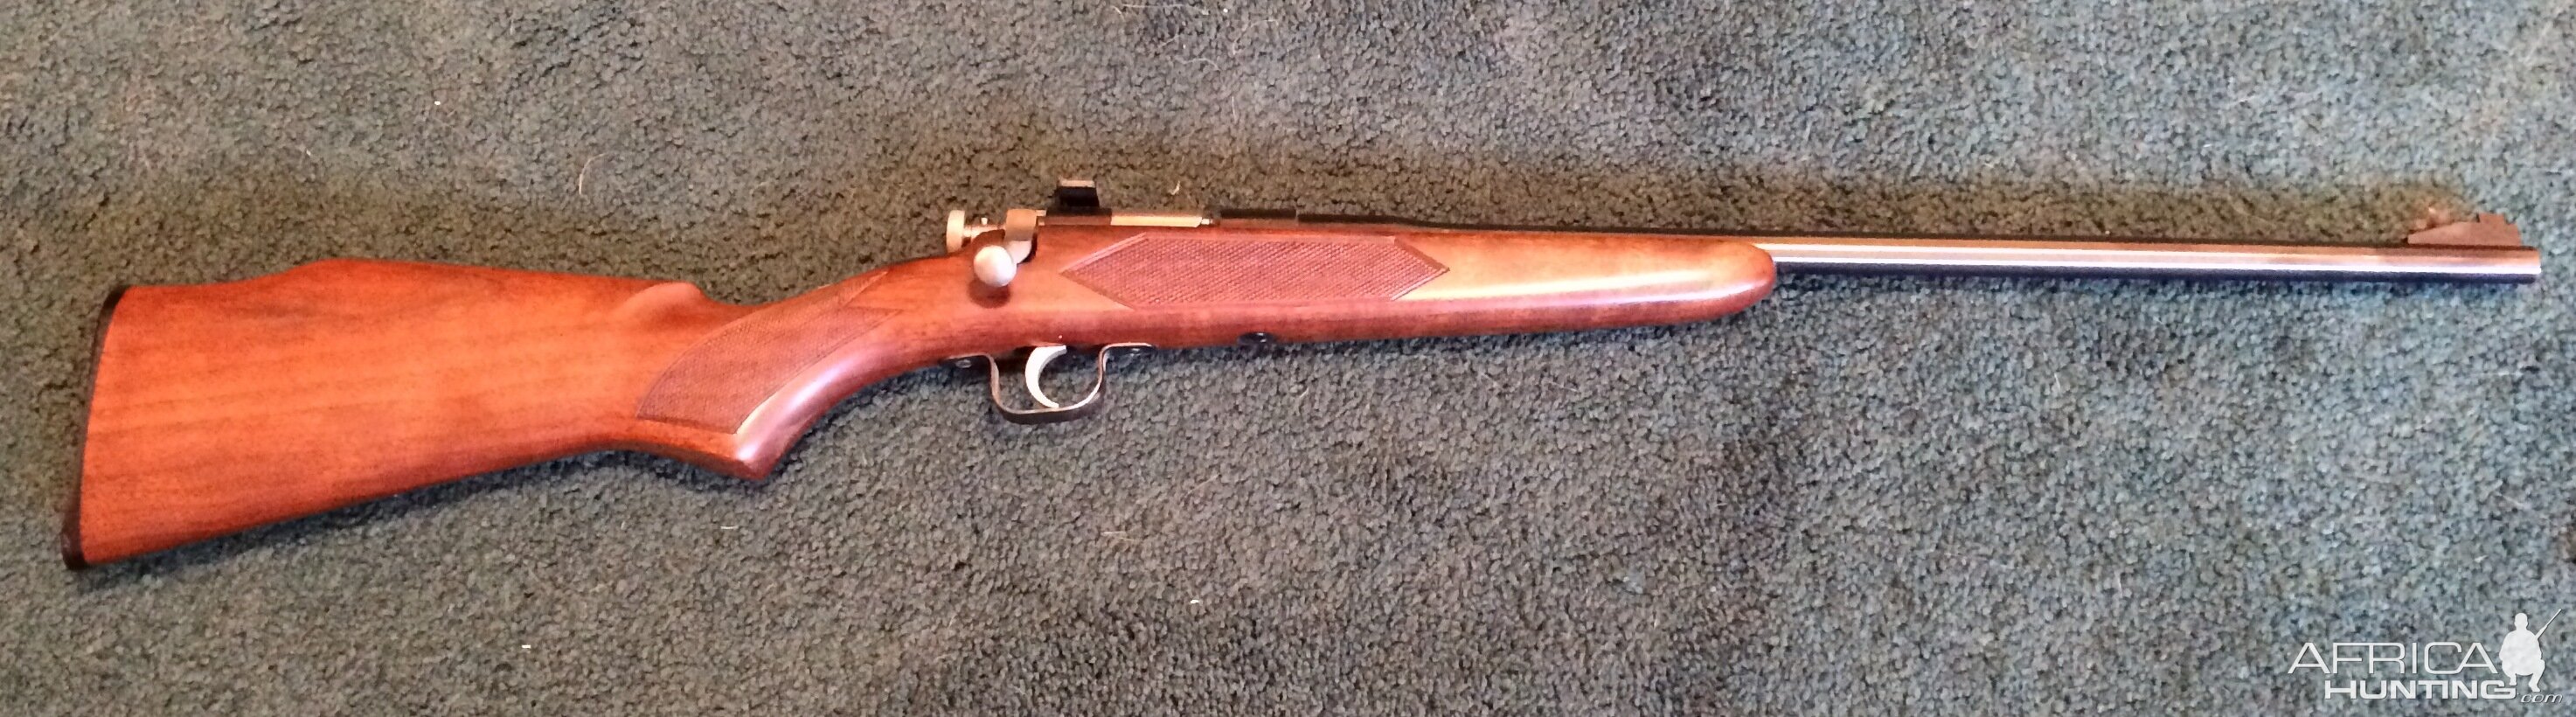 .22 lr. Chipmunk kid rifle